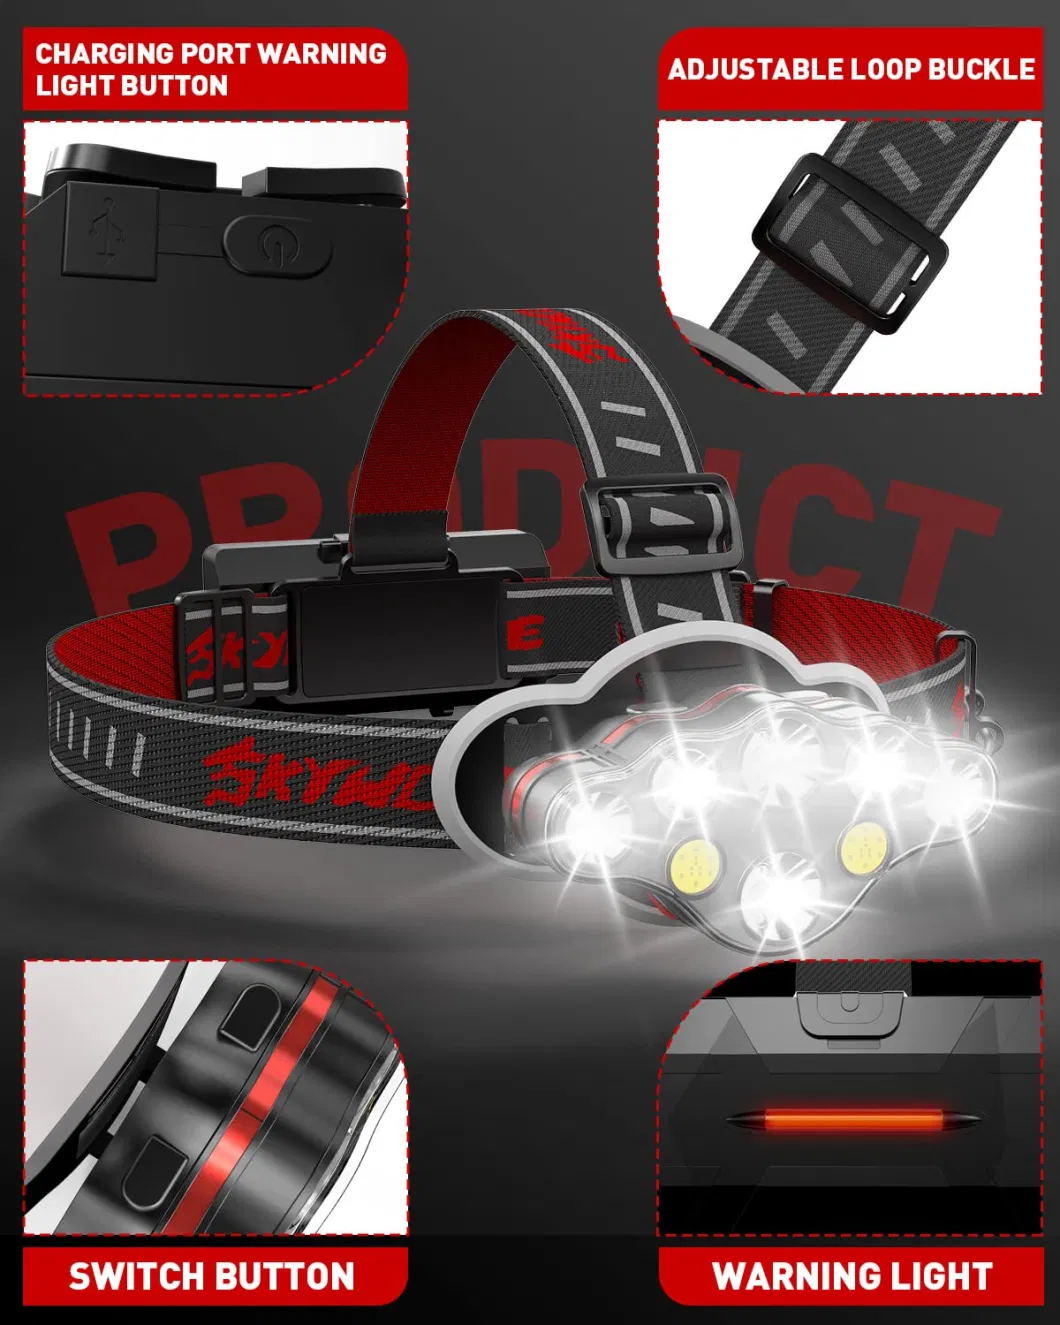 Brightest Head Lamp Outdoor 30W COB Headlights Powerful USB Rechargeable Running Headlamp